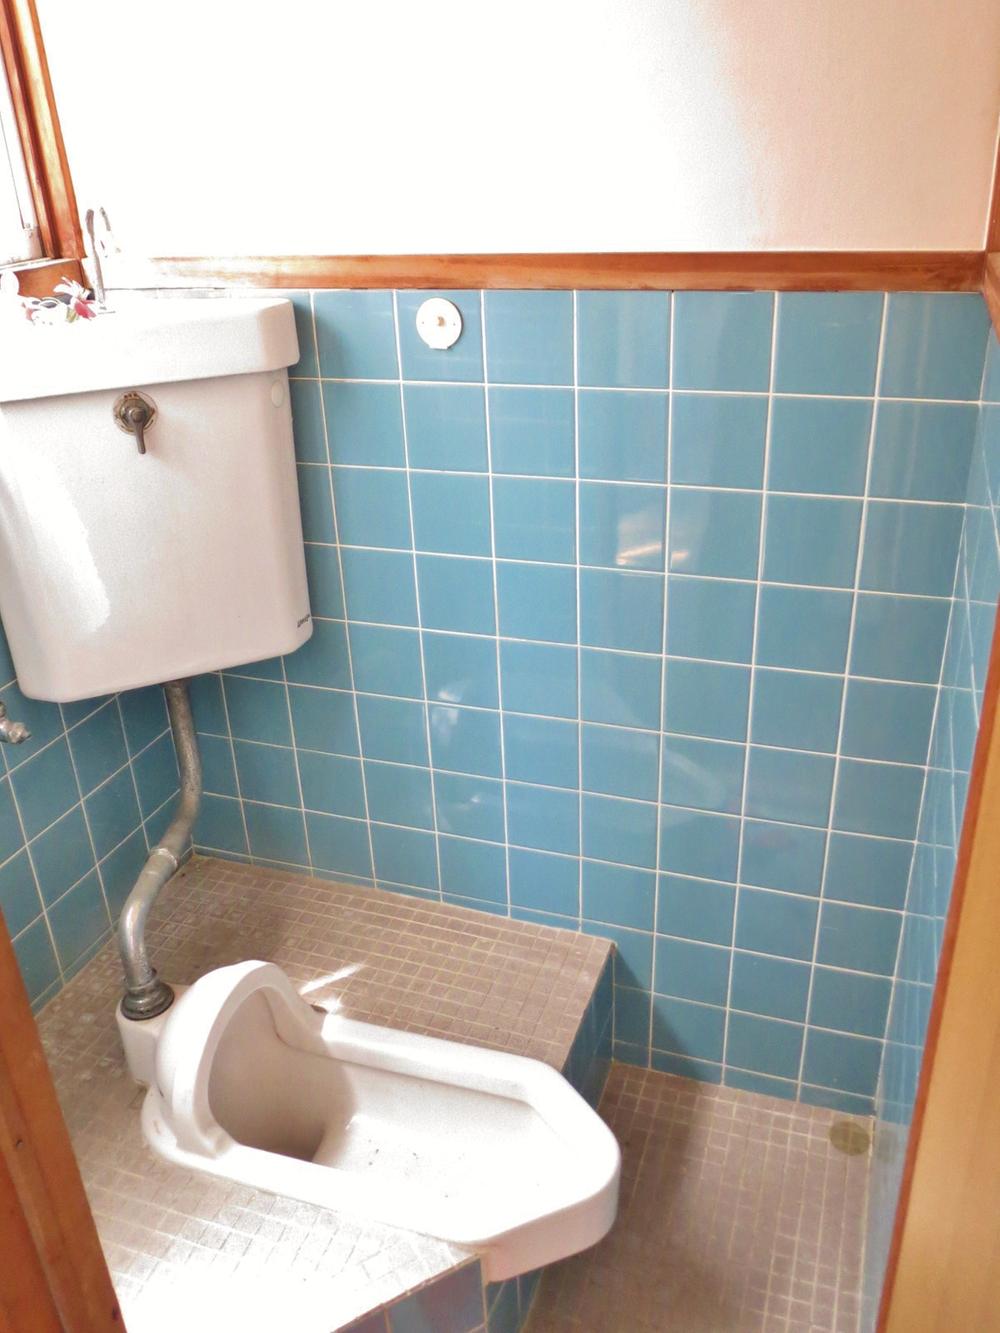 Toilet. Squat toilet